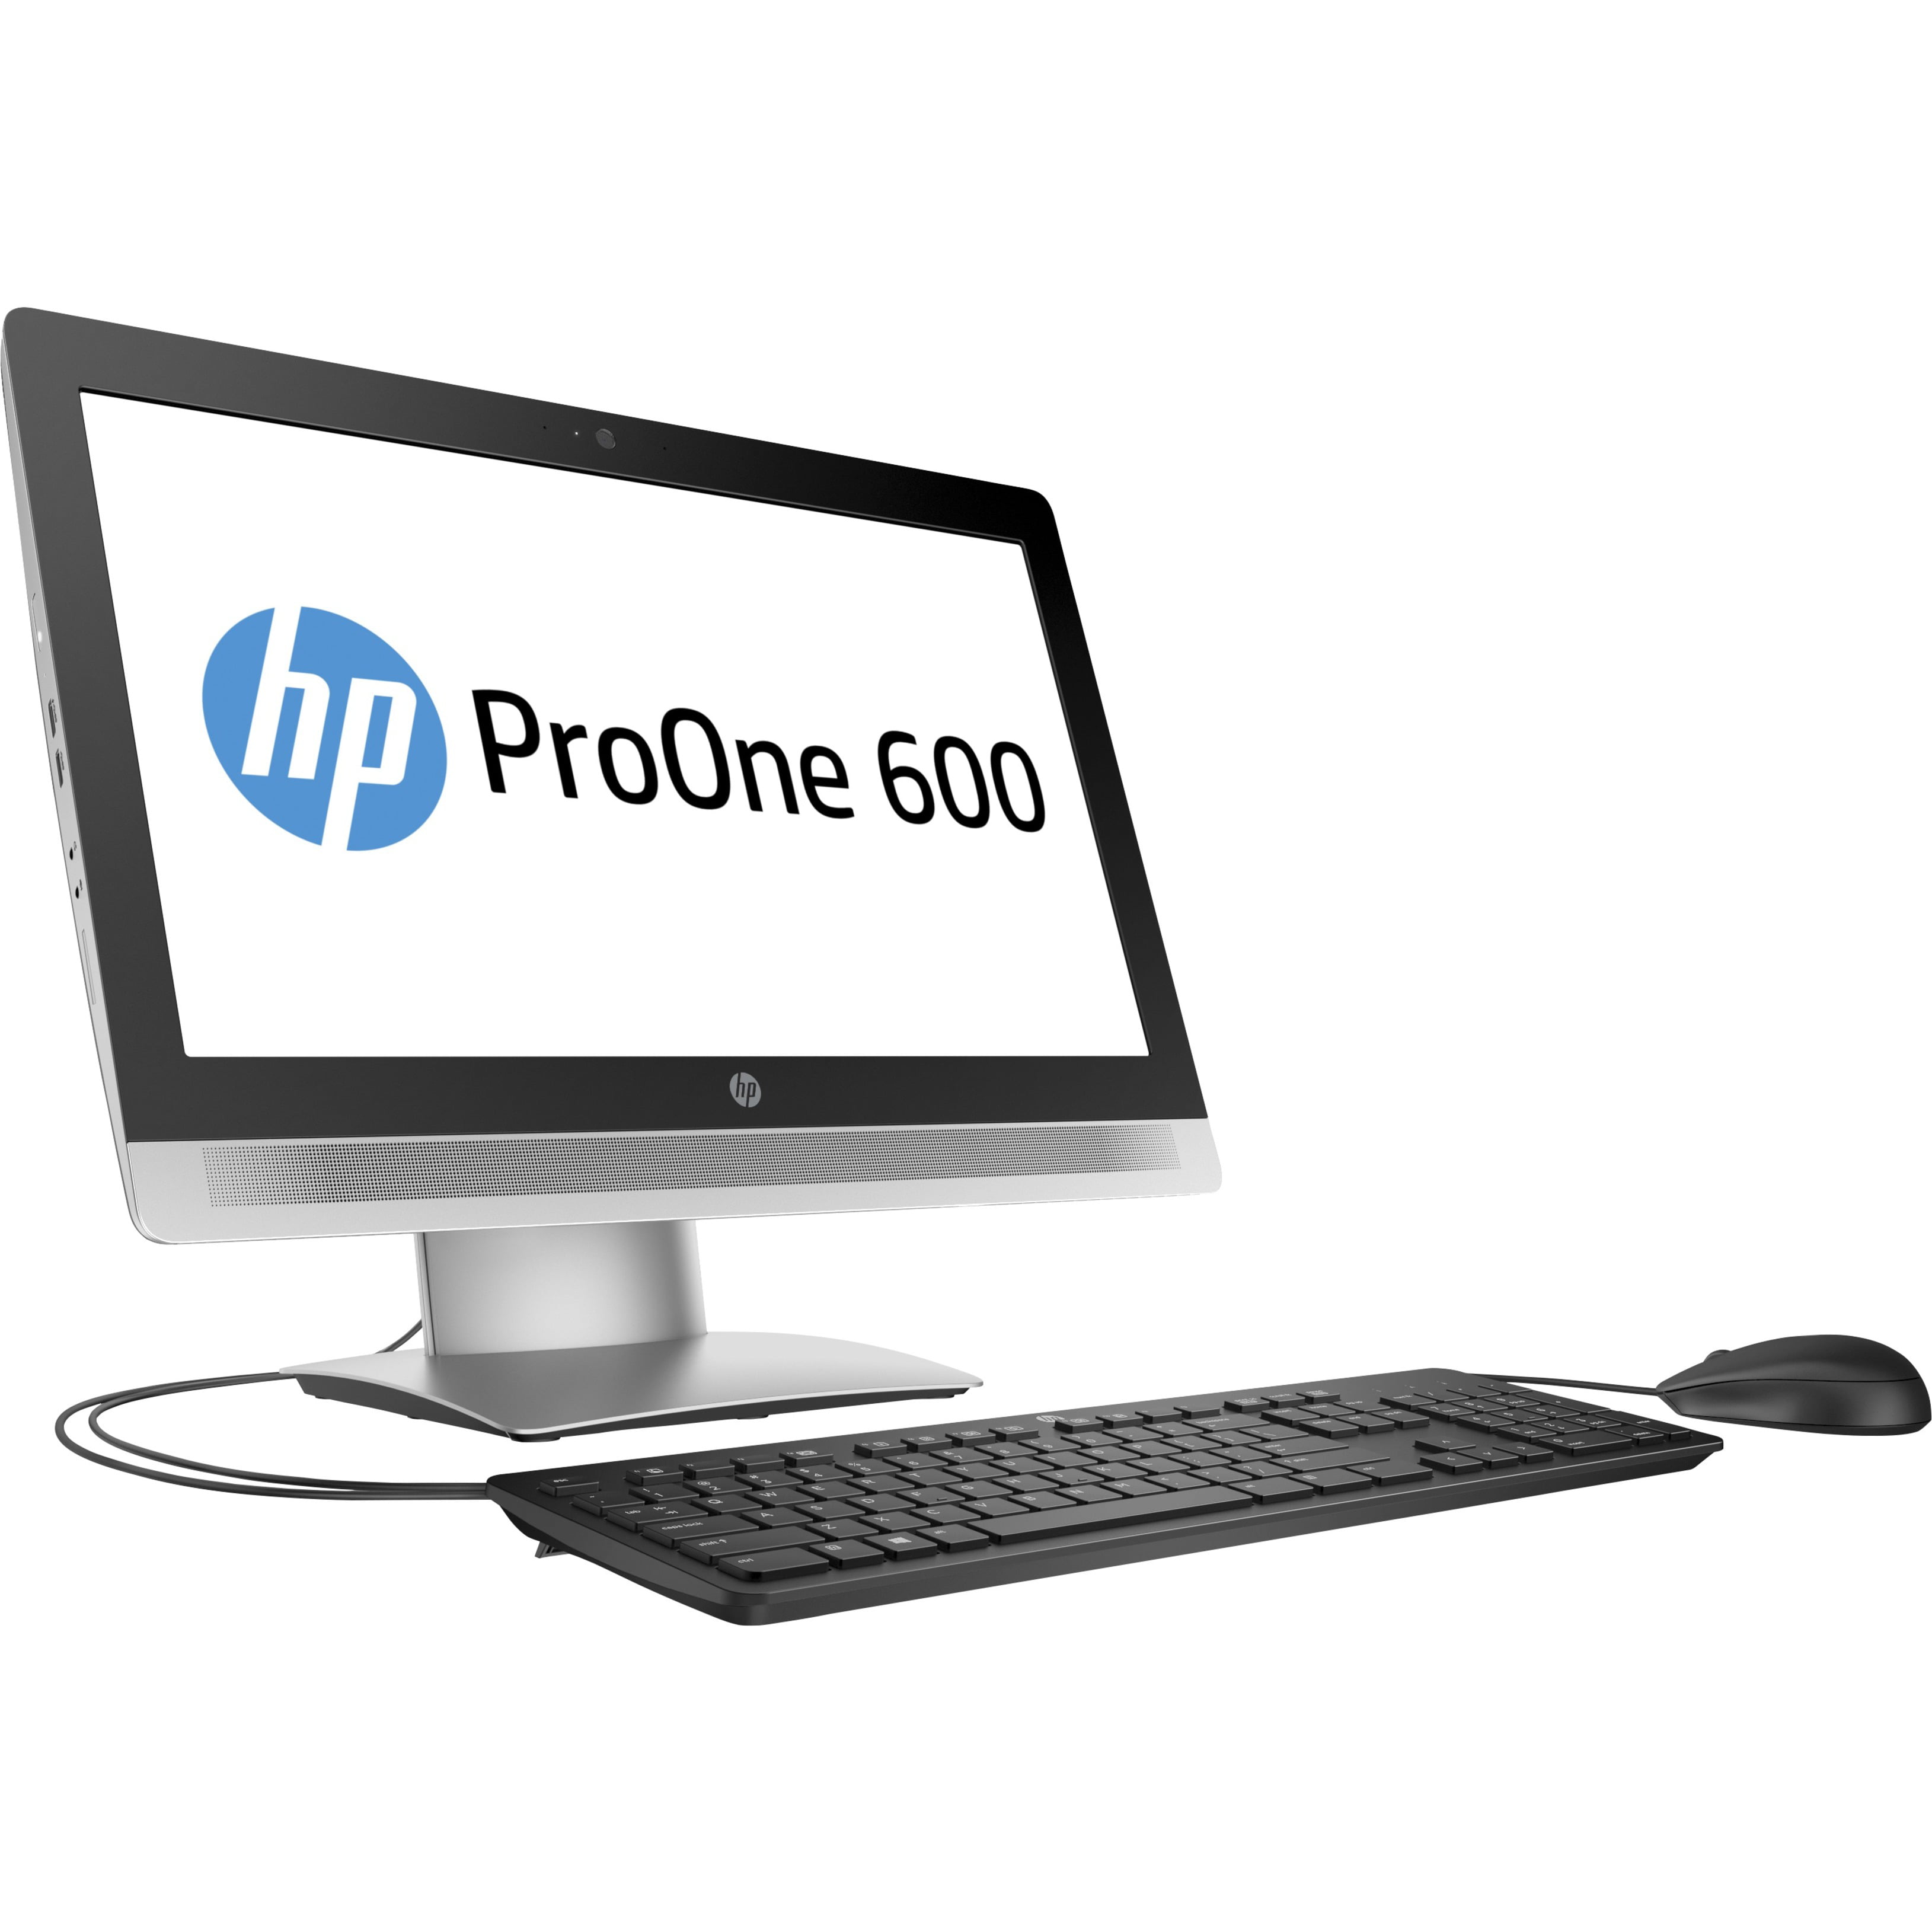 HP ProOne 600 G2 - Core i5 6500 3.2 GHz - 8 GB - 1 TB - LED 21.5